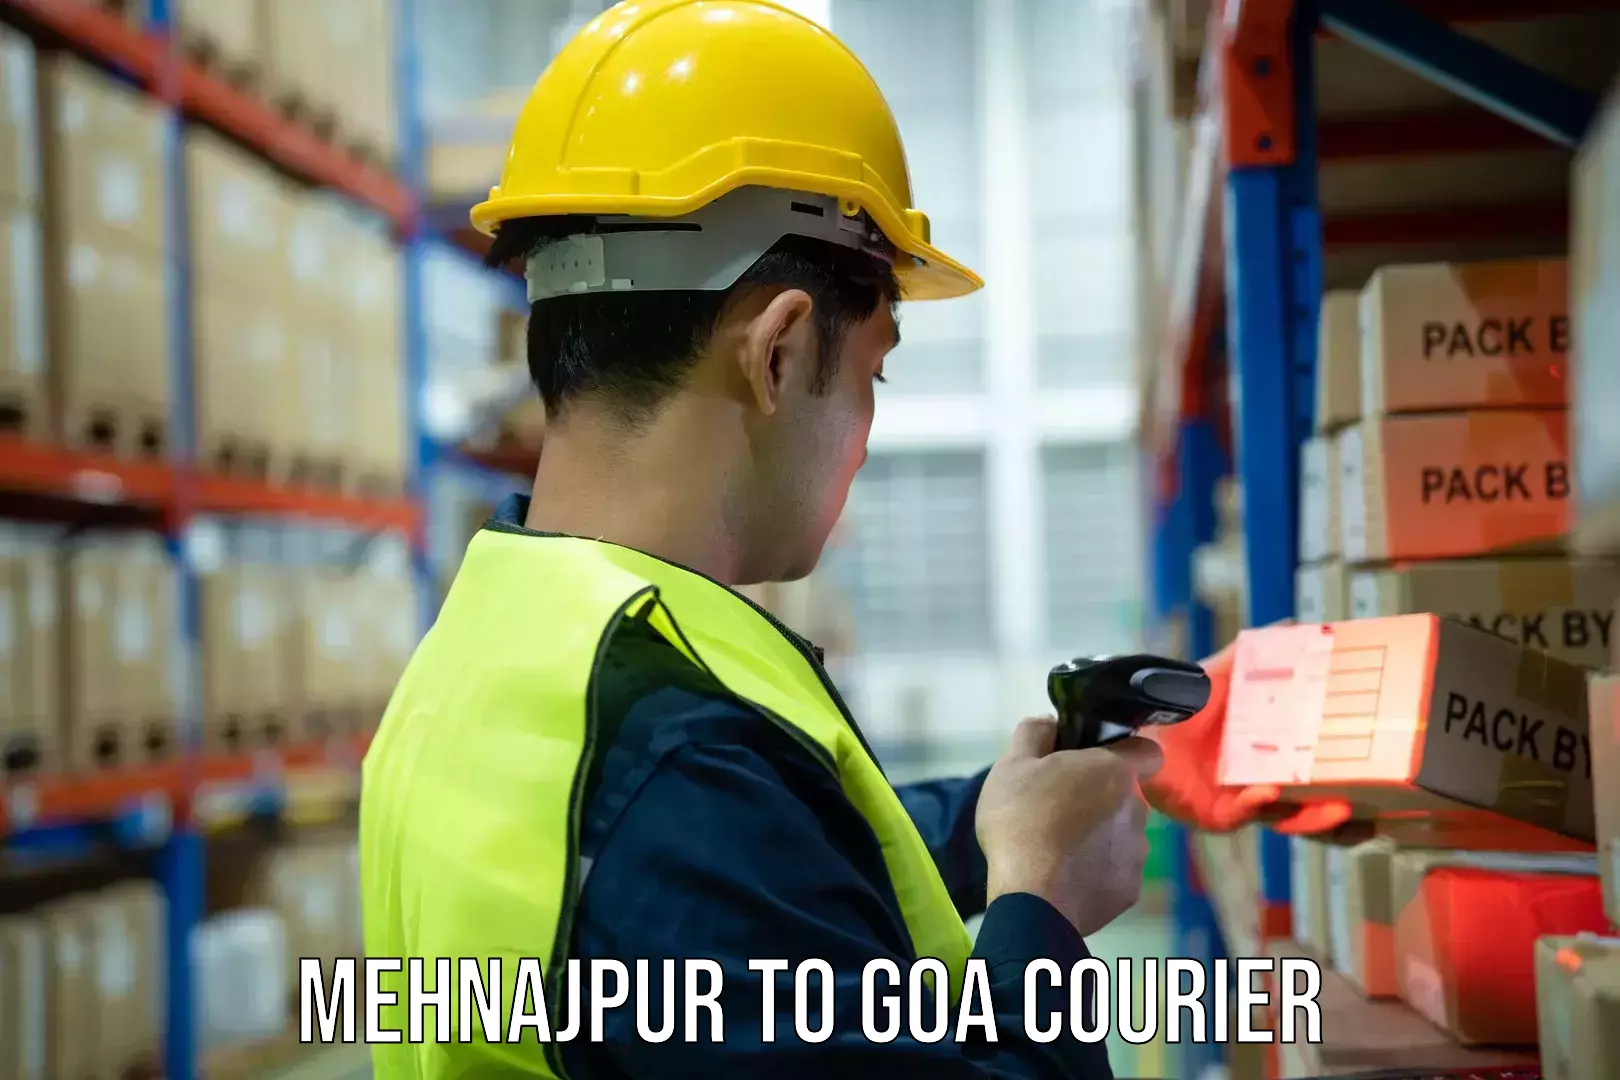 Courier service efficiency Mehnajpur to Bicholim